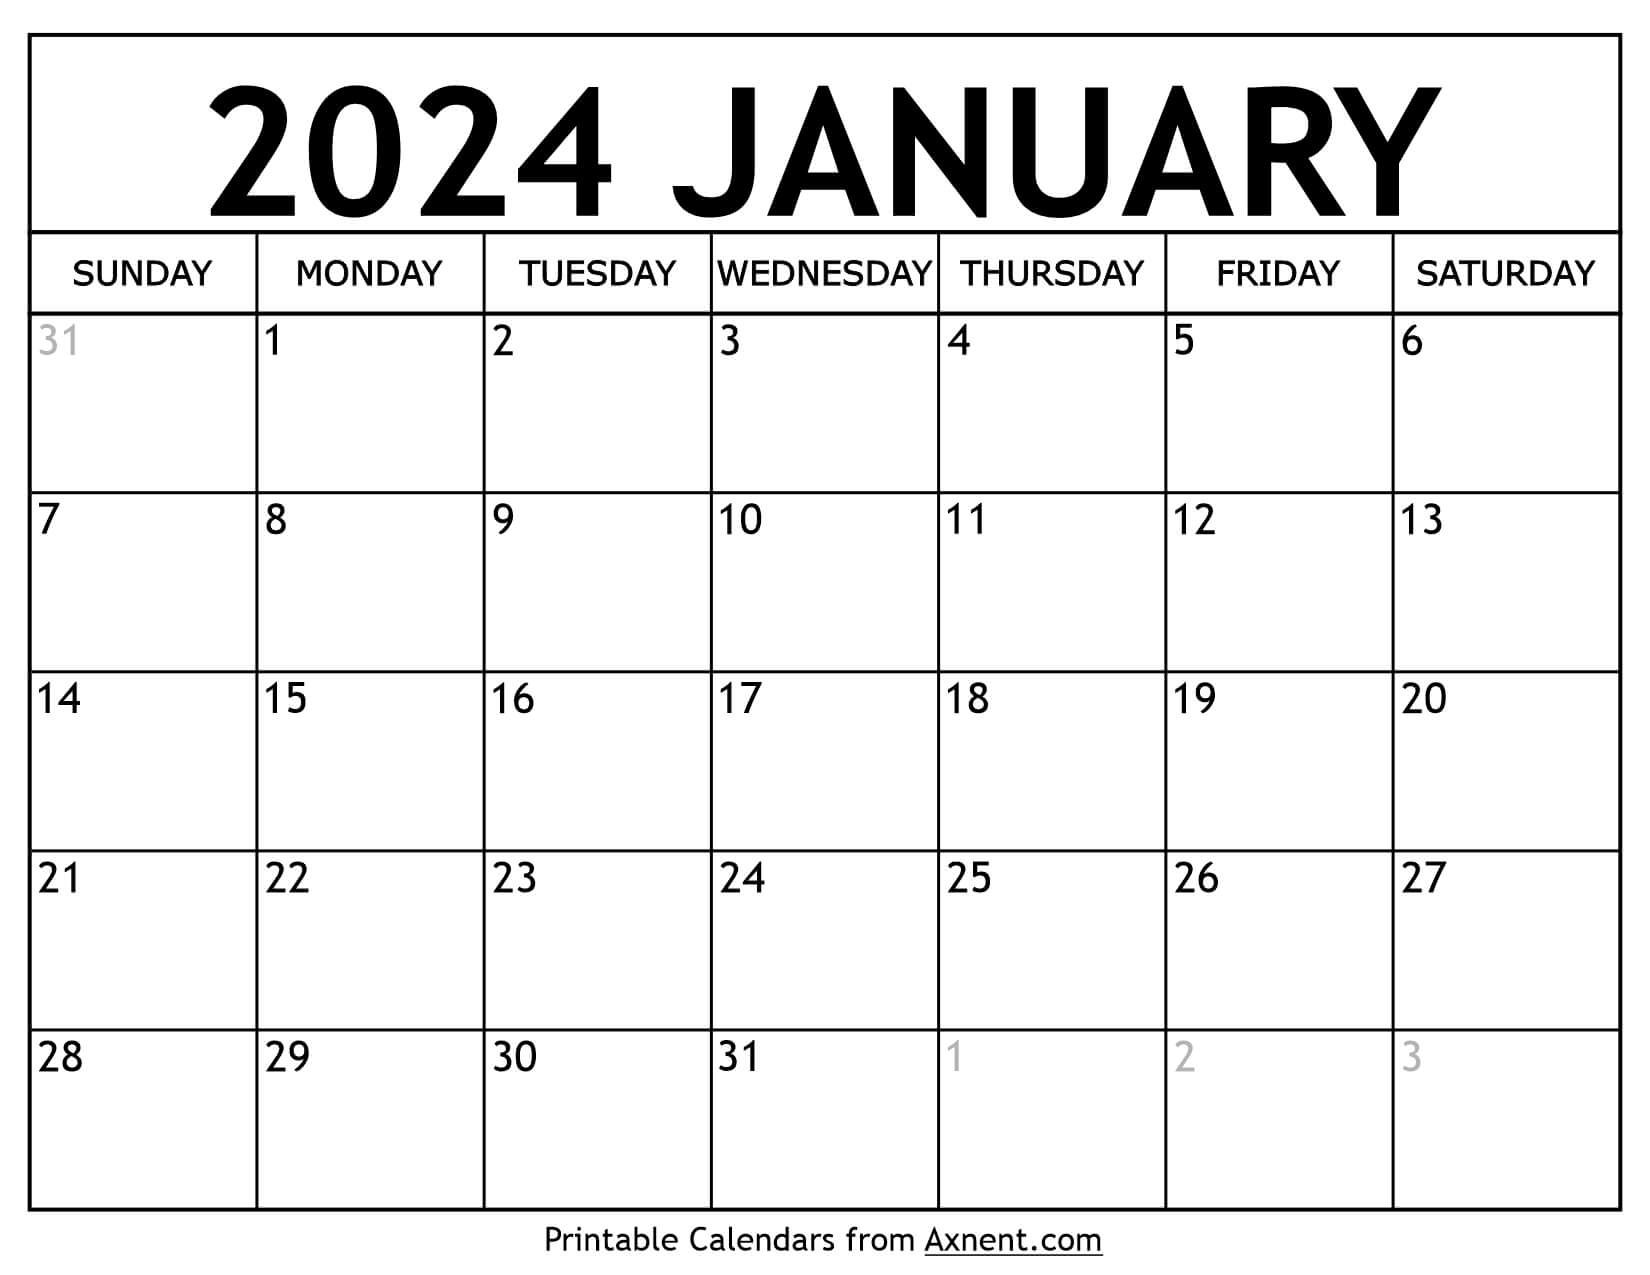 Printable January 2024 Calendar Template - Print Now for Januar 2024 Calendar Printable